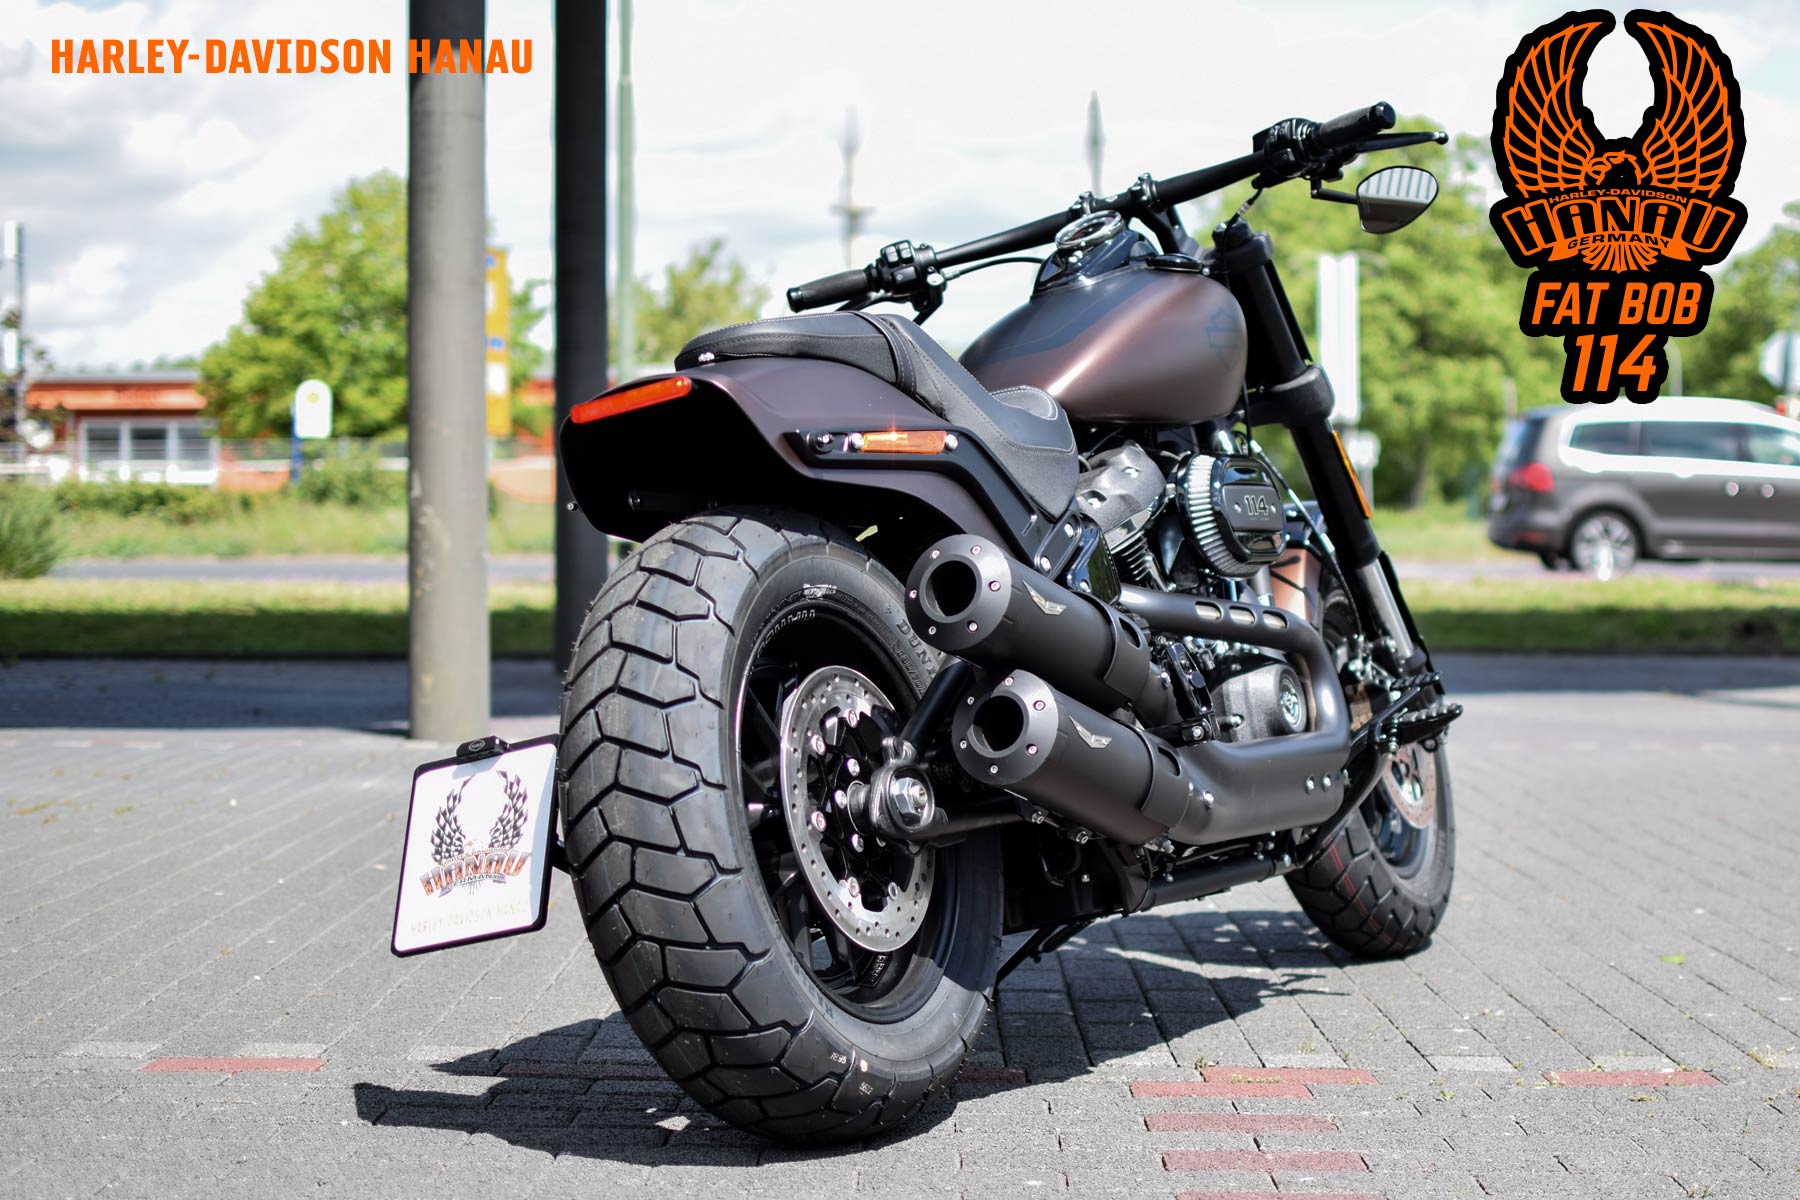 Harley-Davidson Hanau Fat Bob 114 Customclub